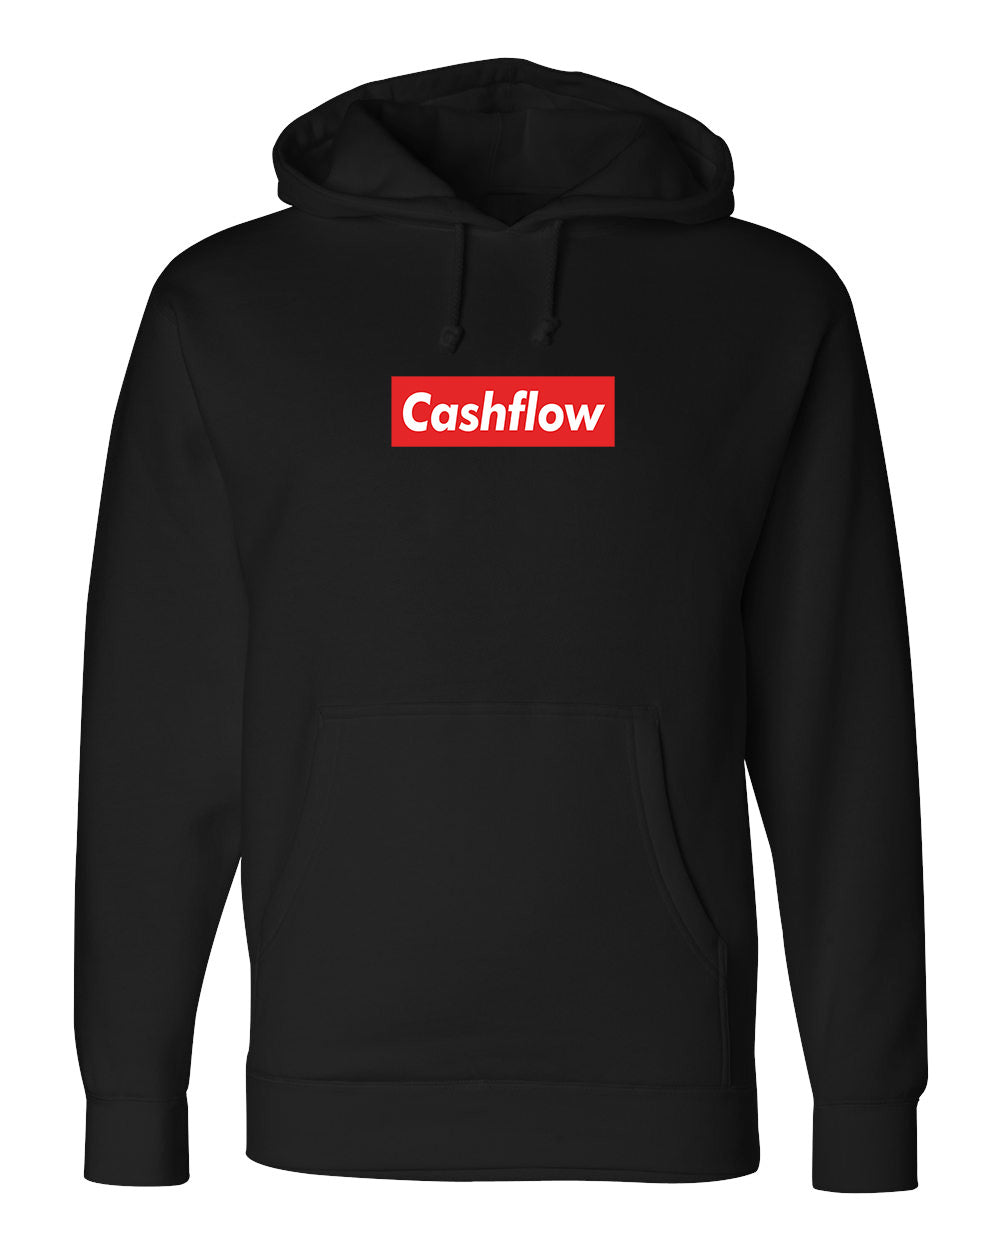 Cashflow Premium Hoodie- Black